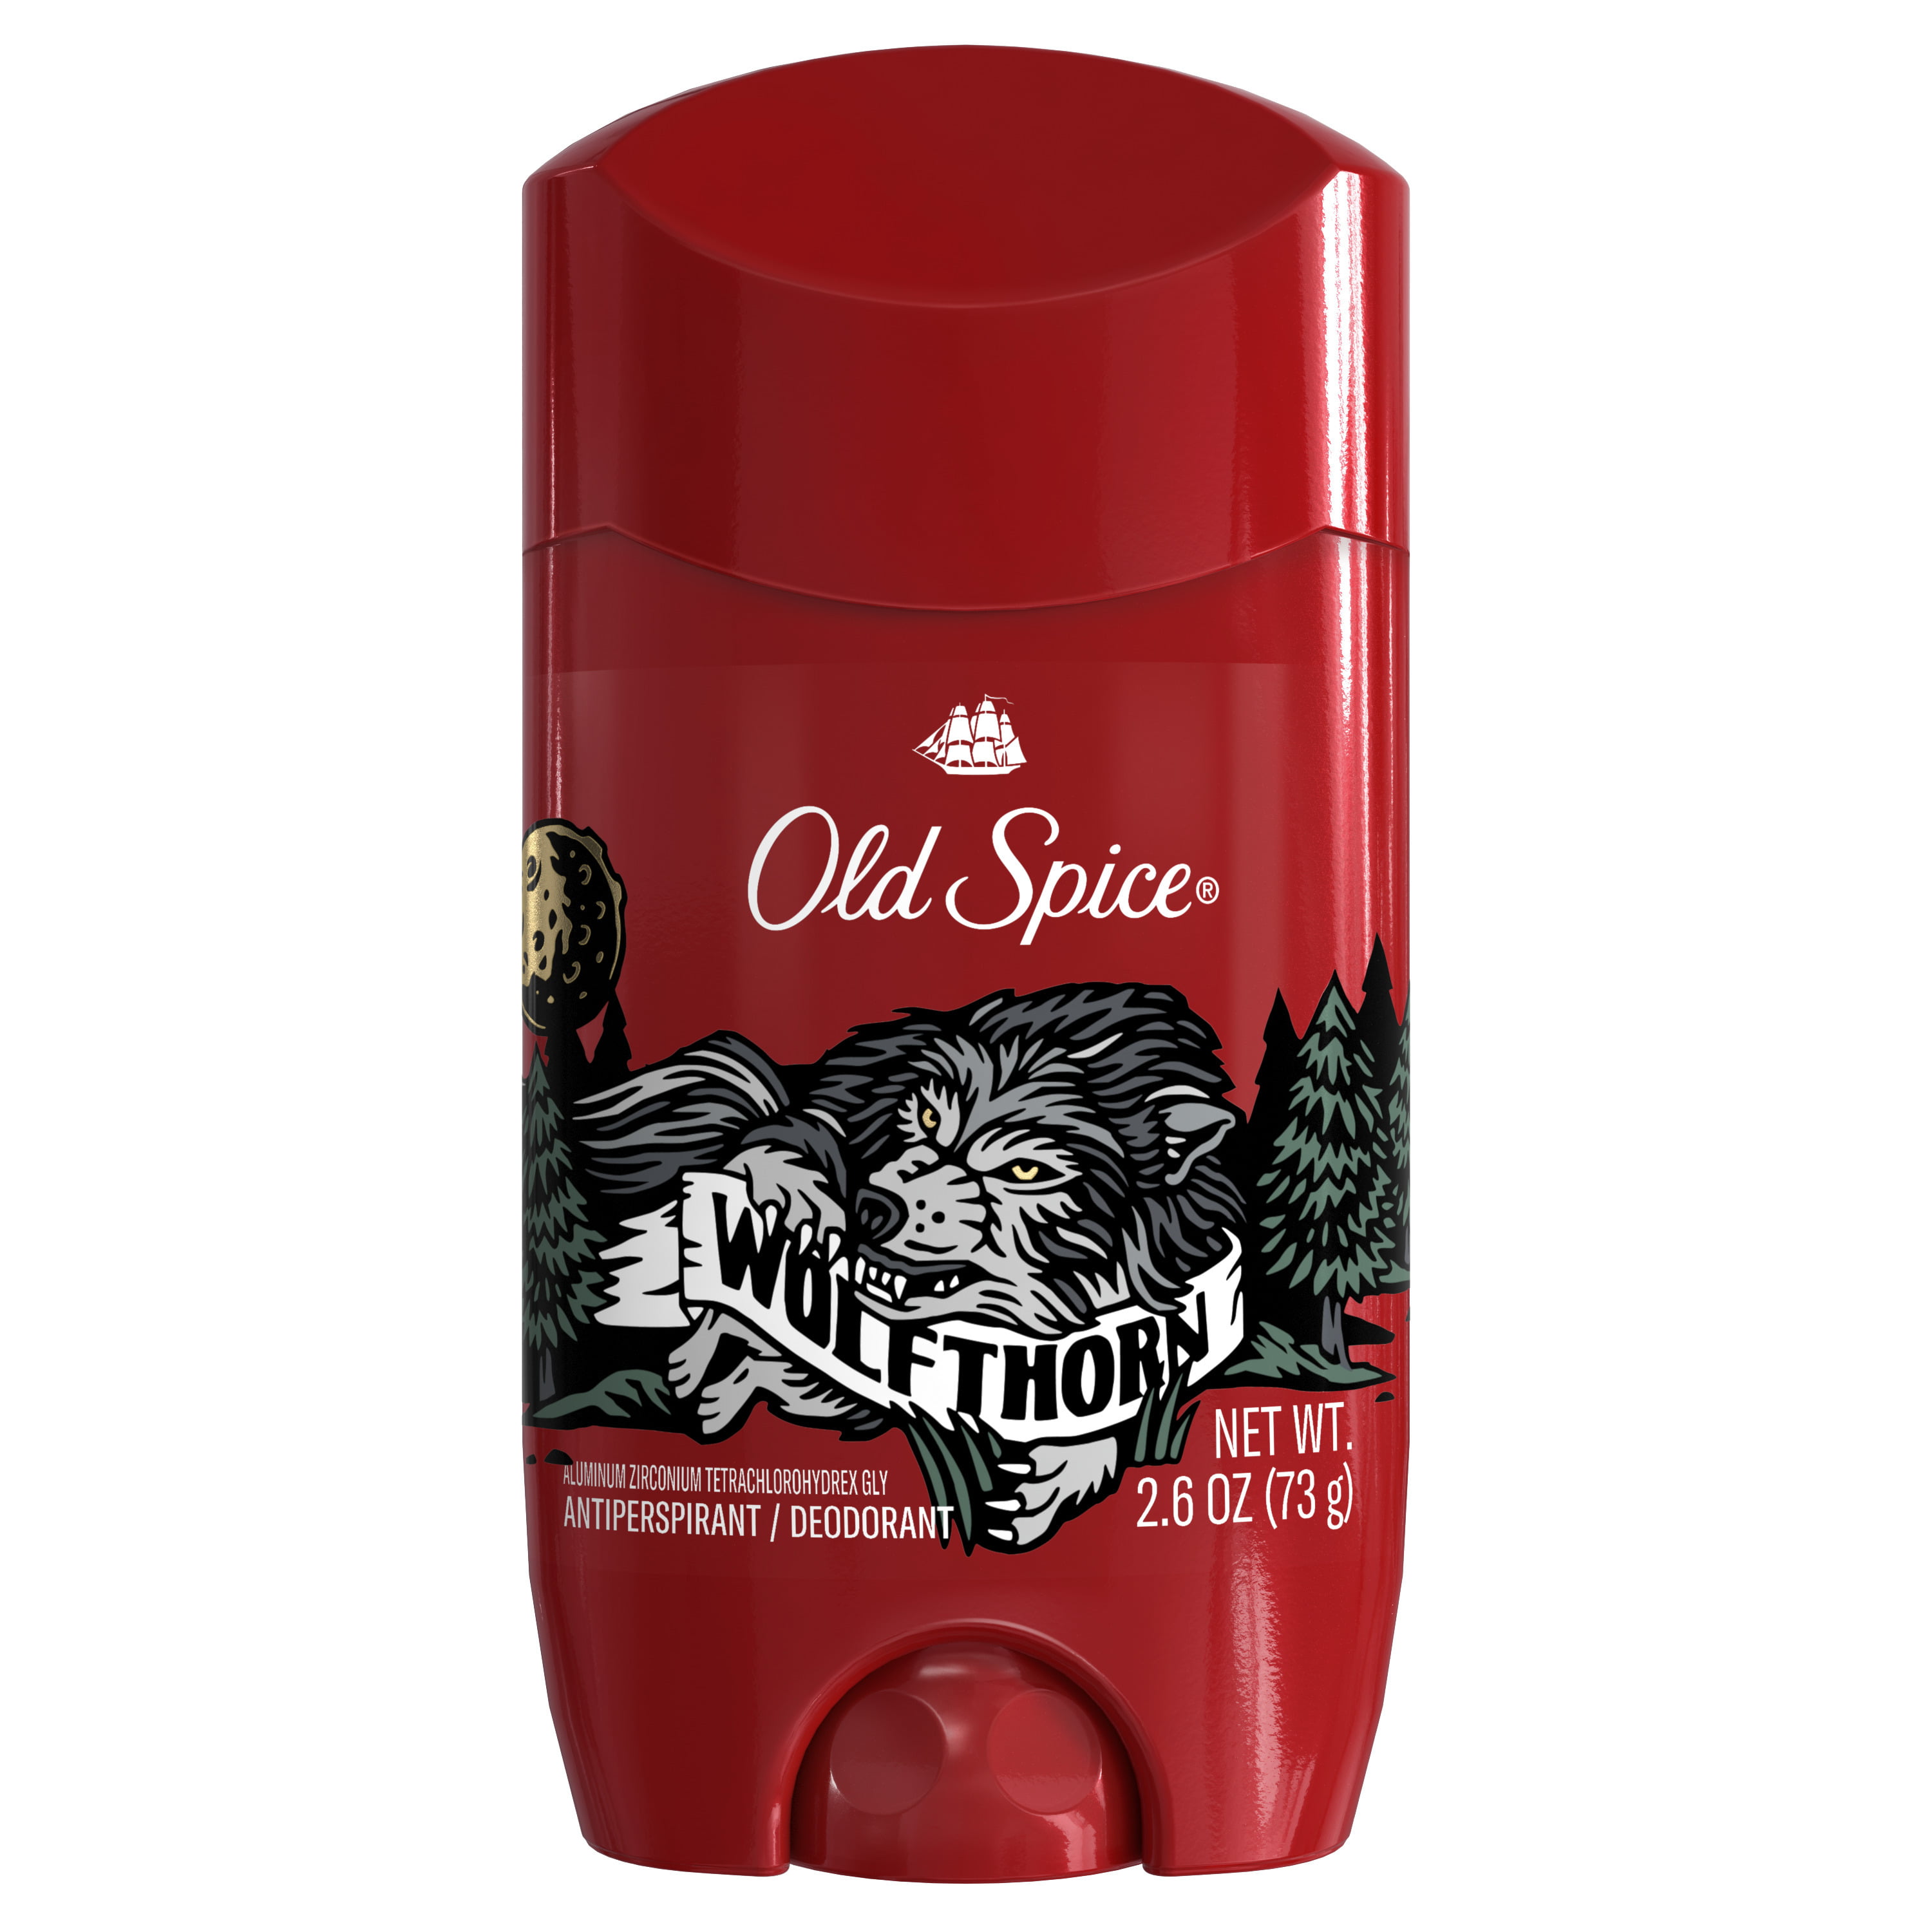 Old Spice Antiperspirant Deodorant for Men, Wolfthorn, 2.6 oz